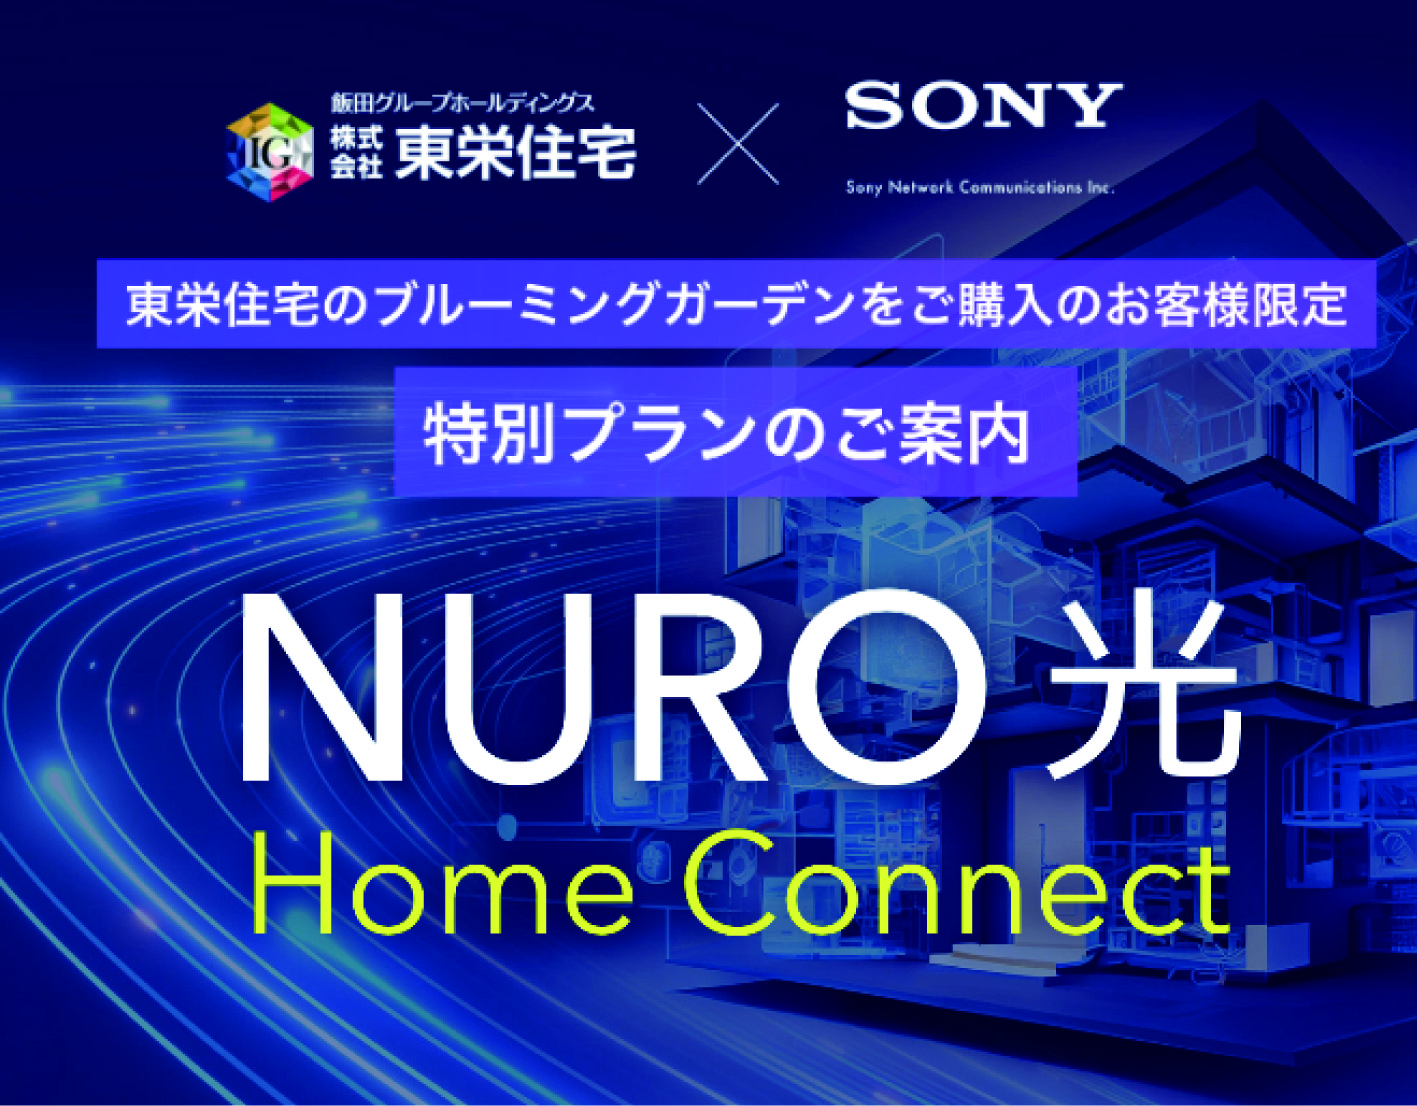 「NURO 光 Home Connect」
